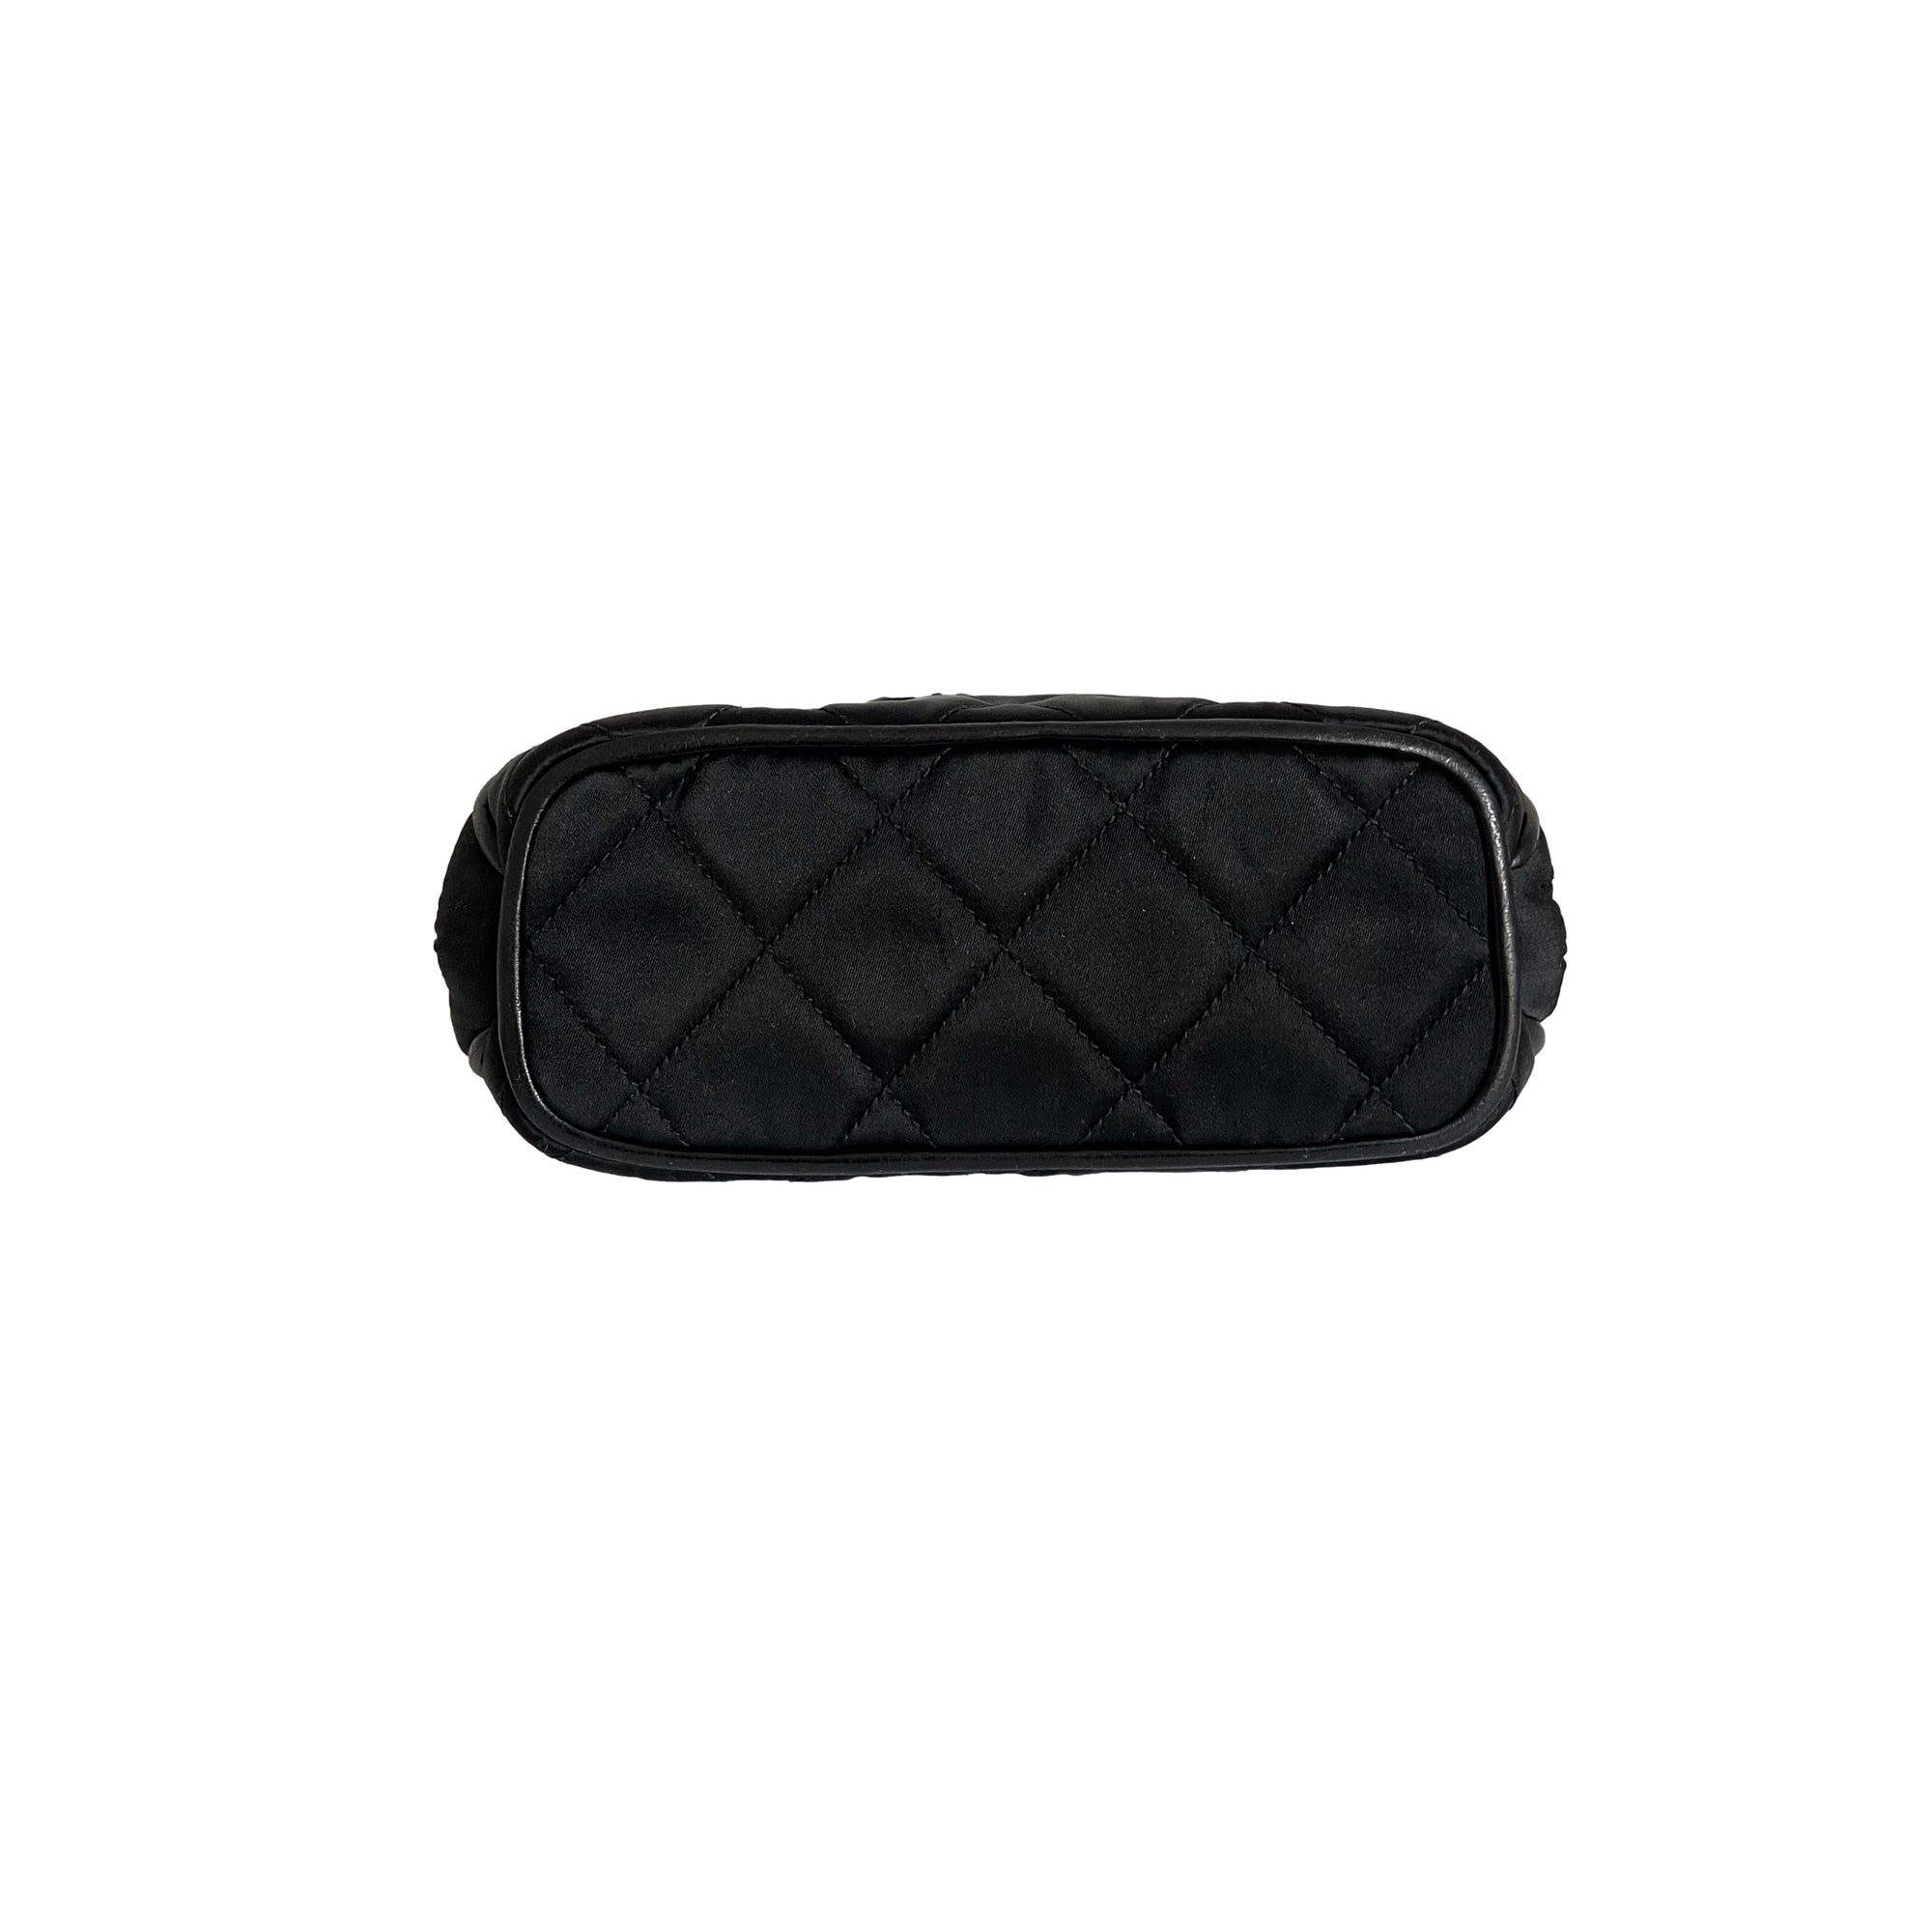 Chanel Black Satin Top Handle Bag - Handbags